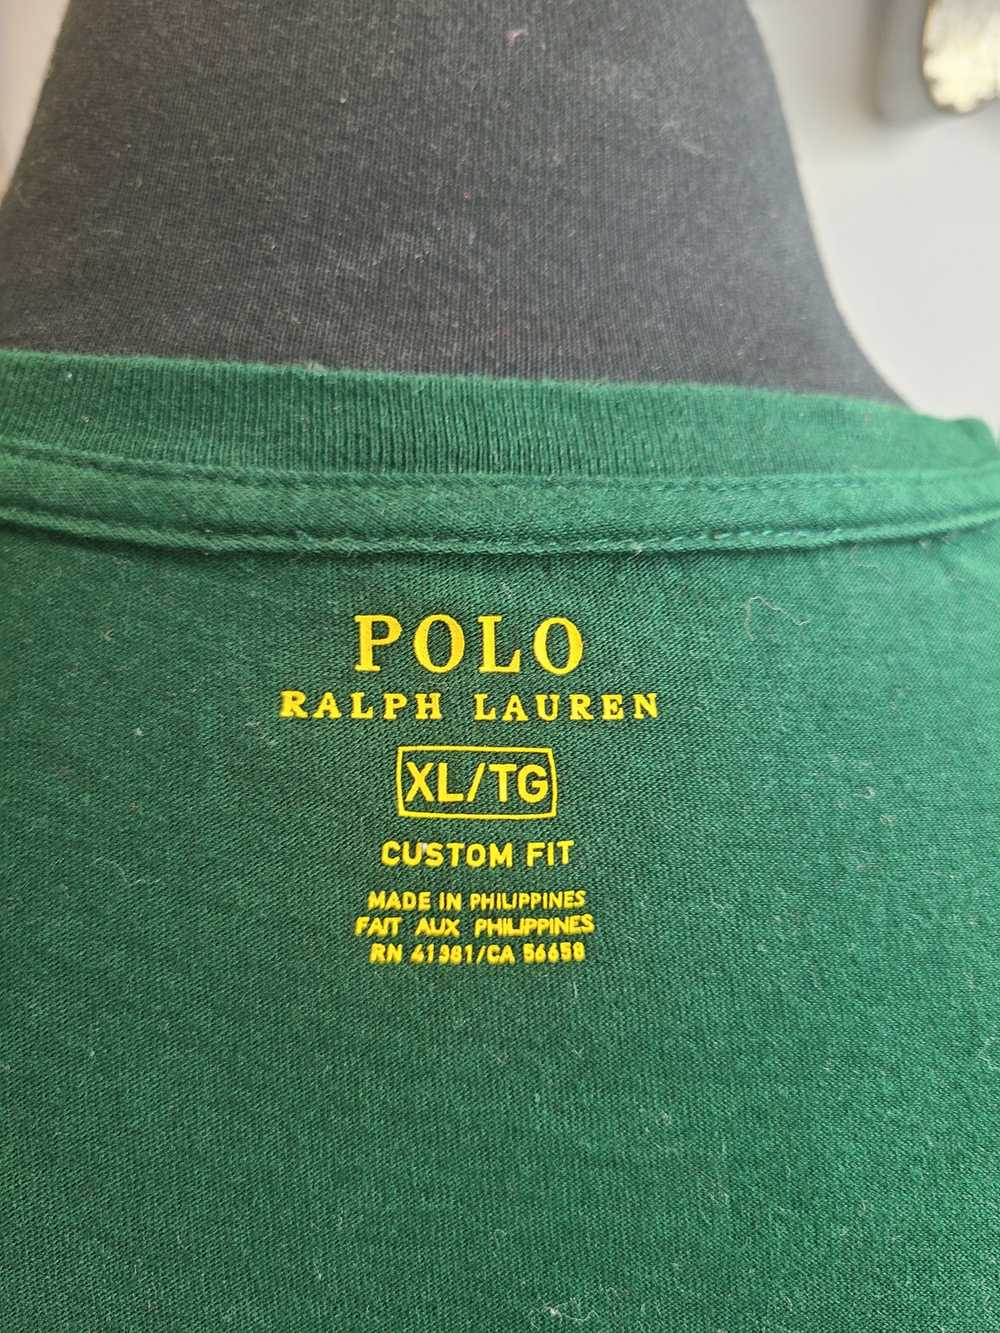 Polo Ralph Lauren Varsity track short sleeve shirt - image 2